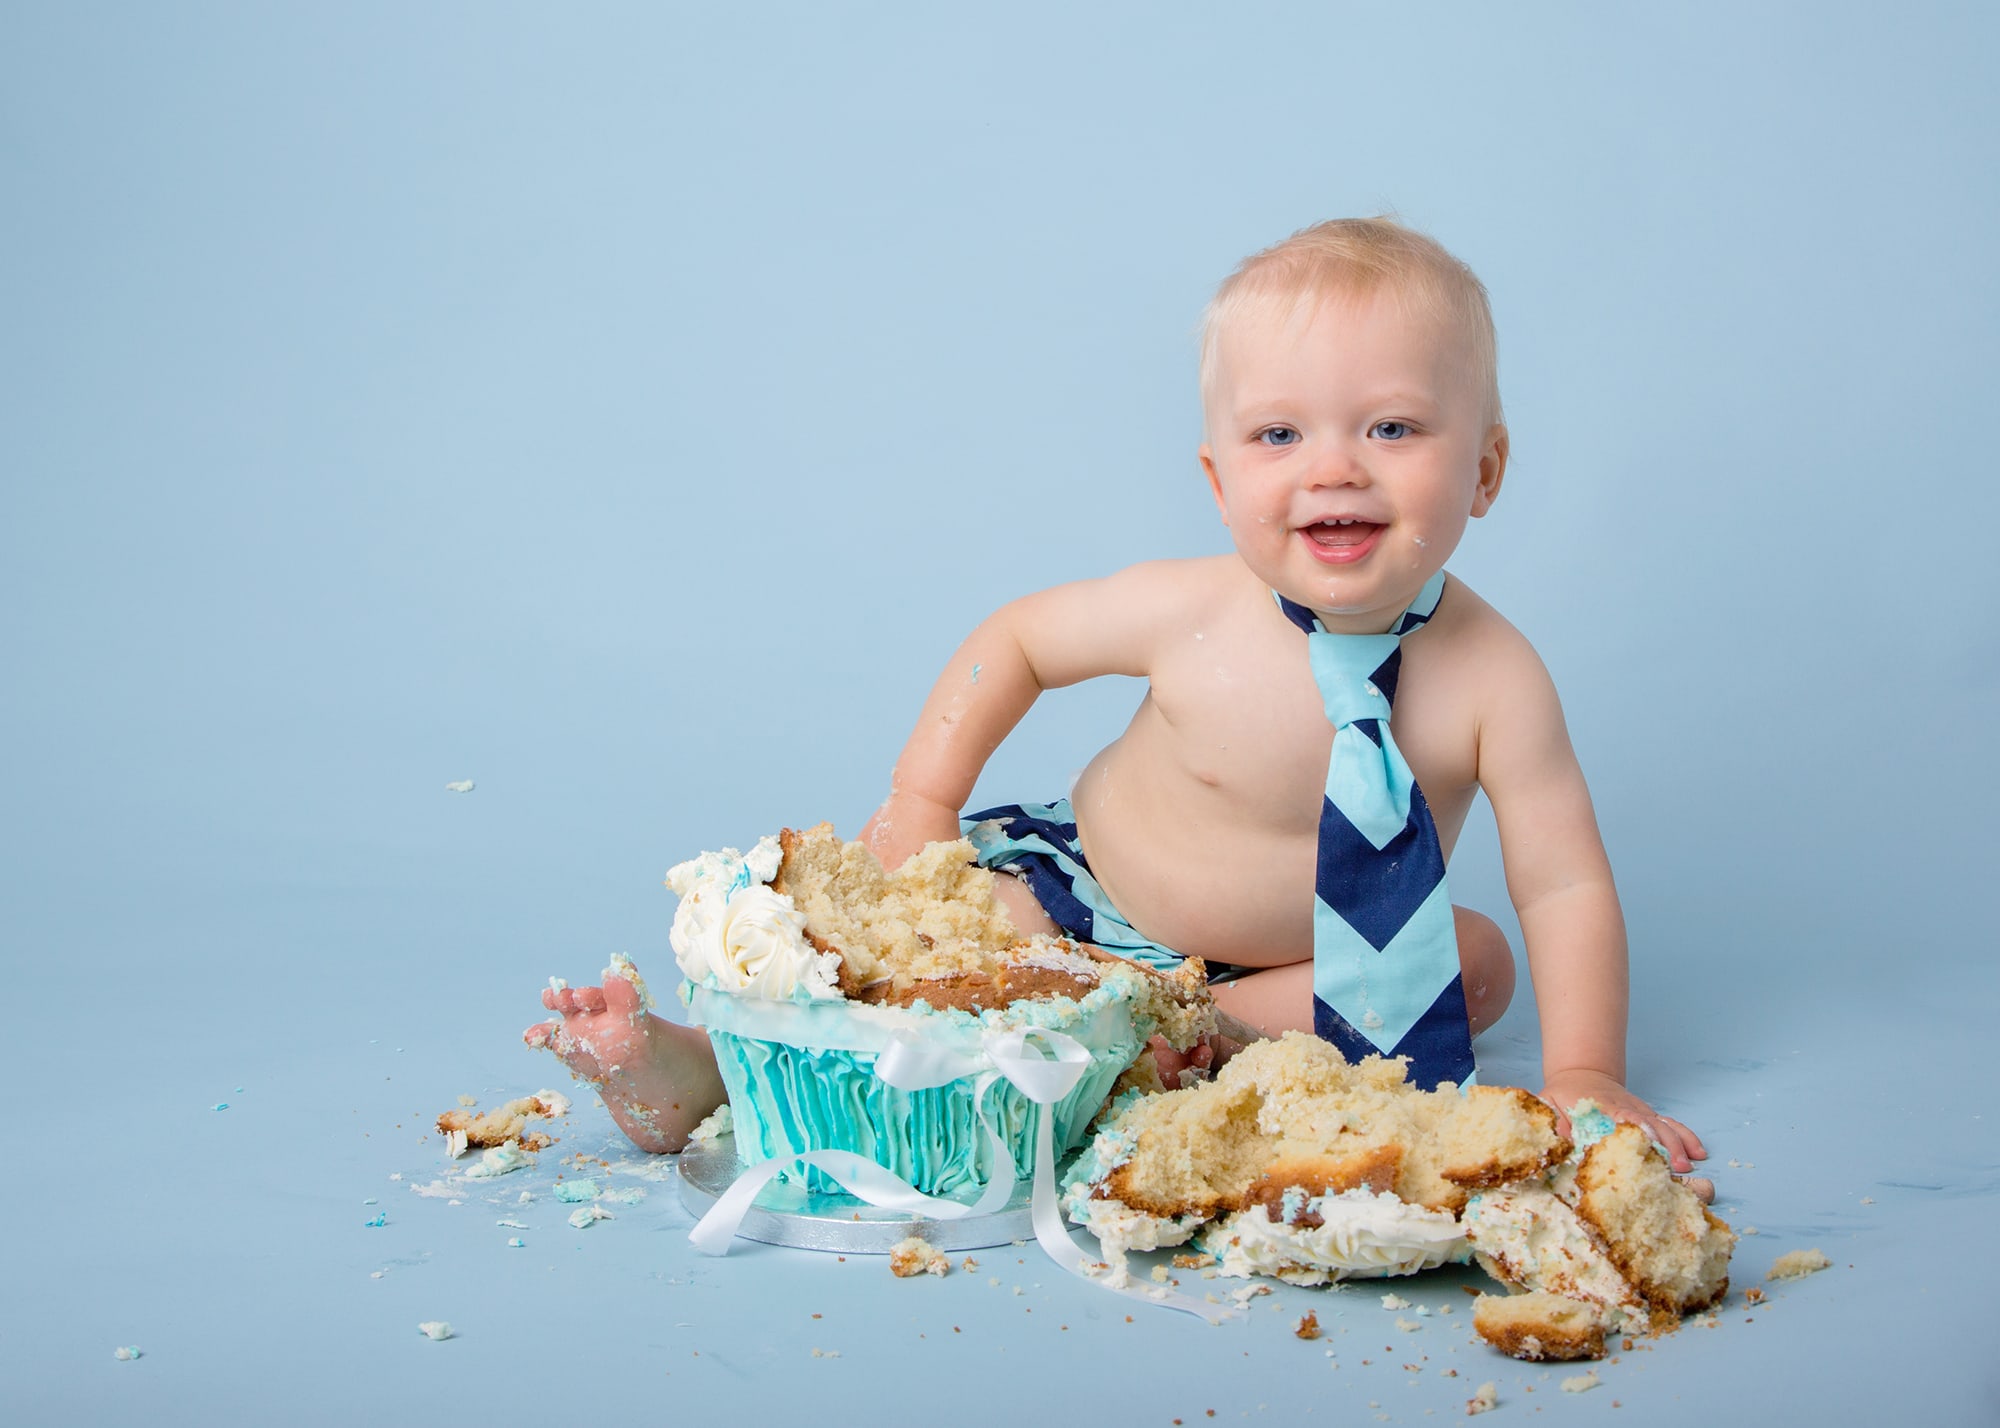 cake smash photoshoot with baby boy on a blue background with cake